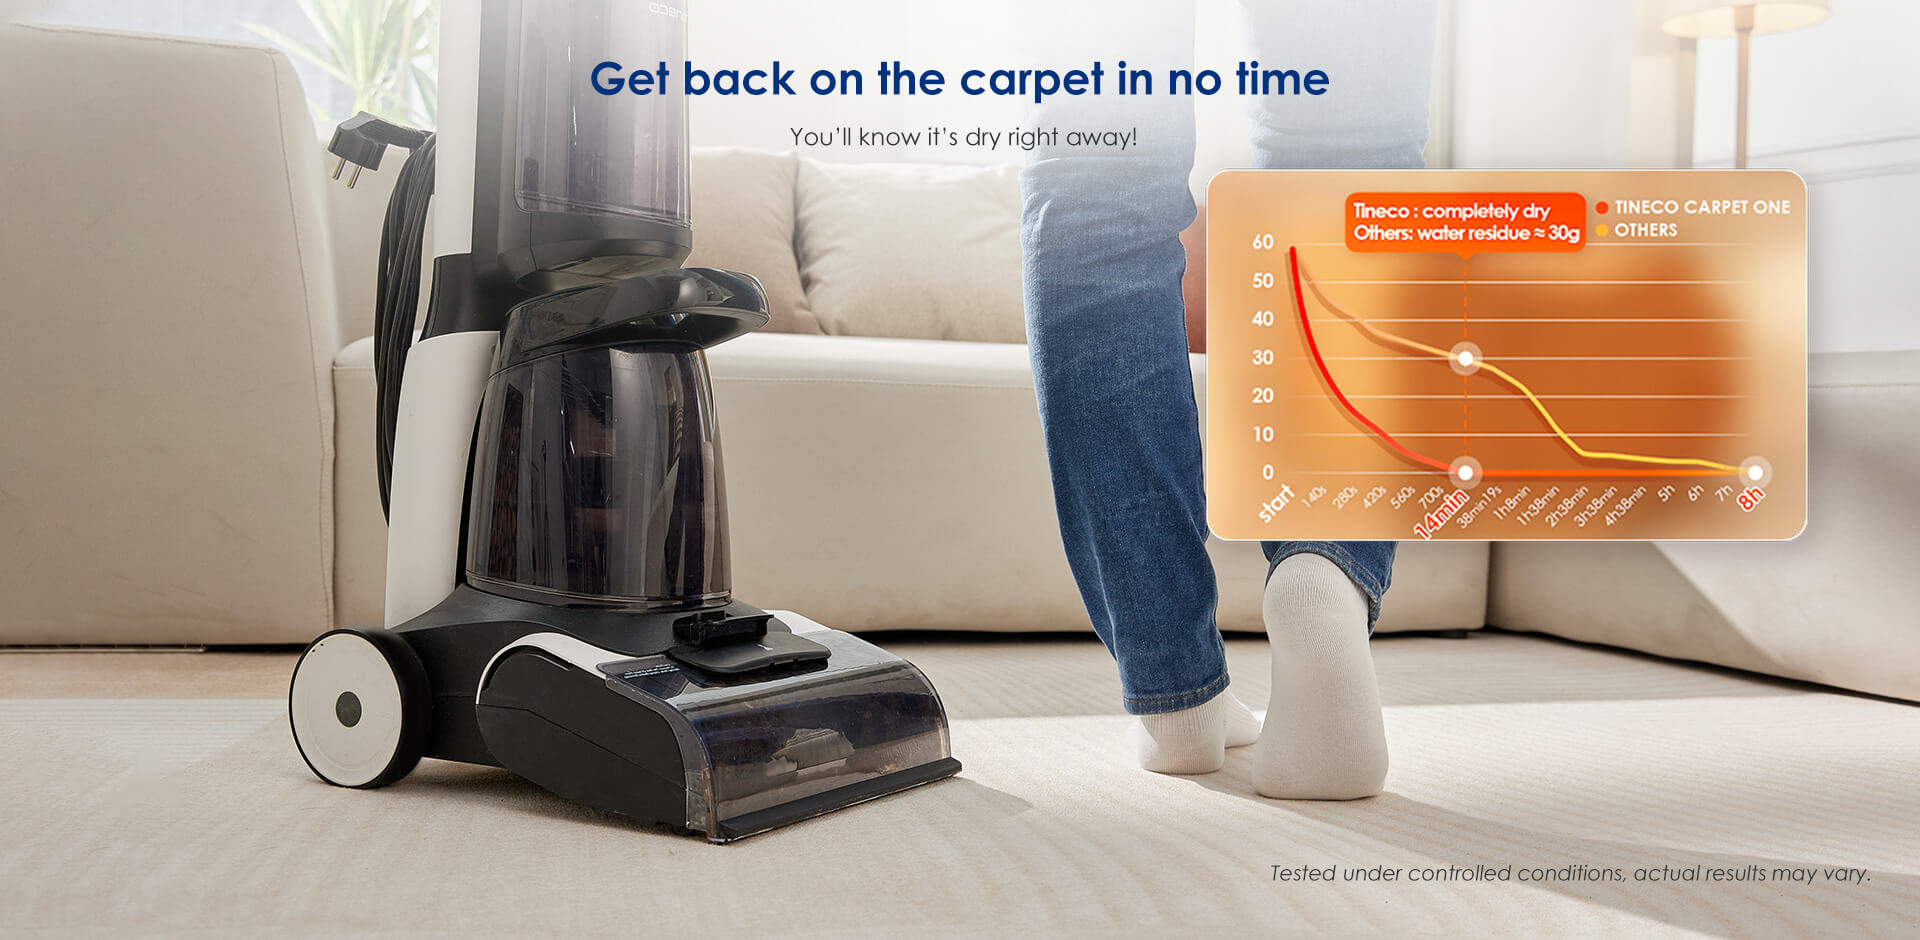 TINECO CARPET ONE Smart Carpet Cleaner